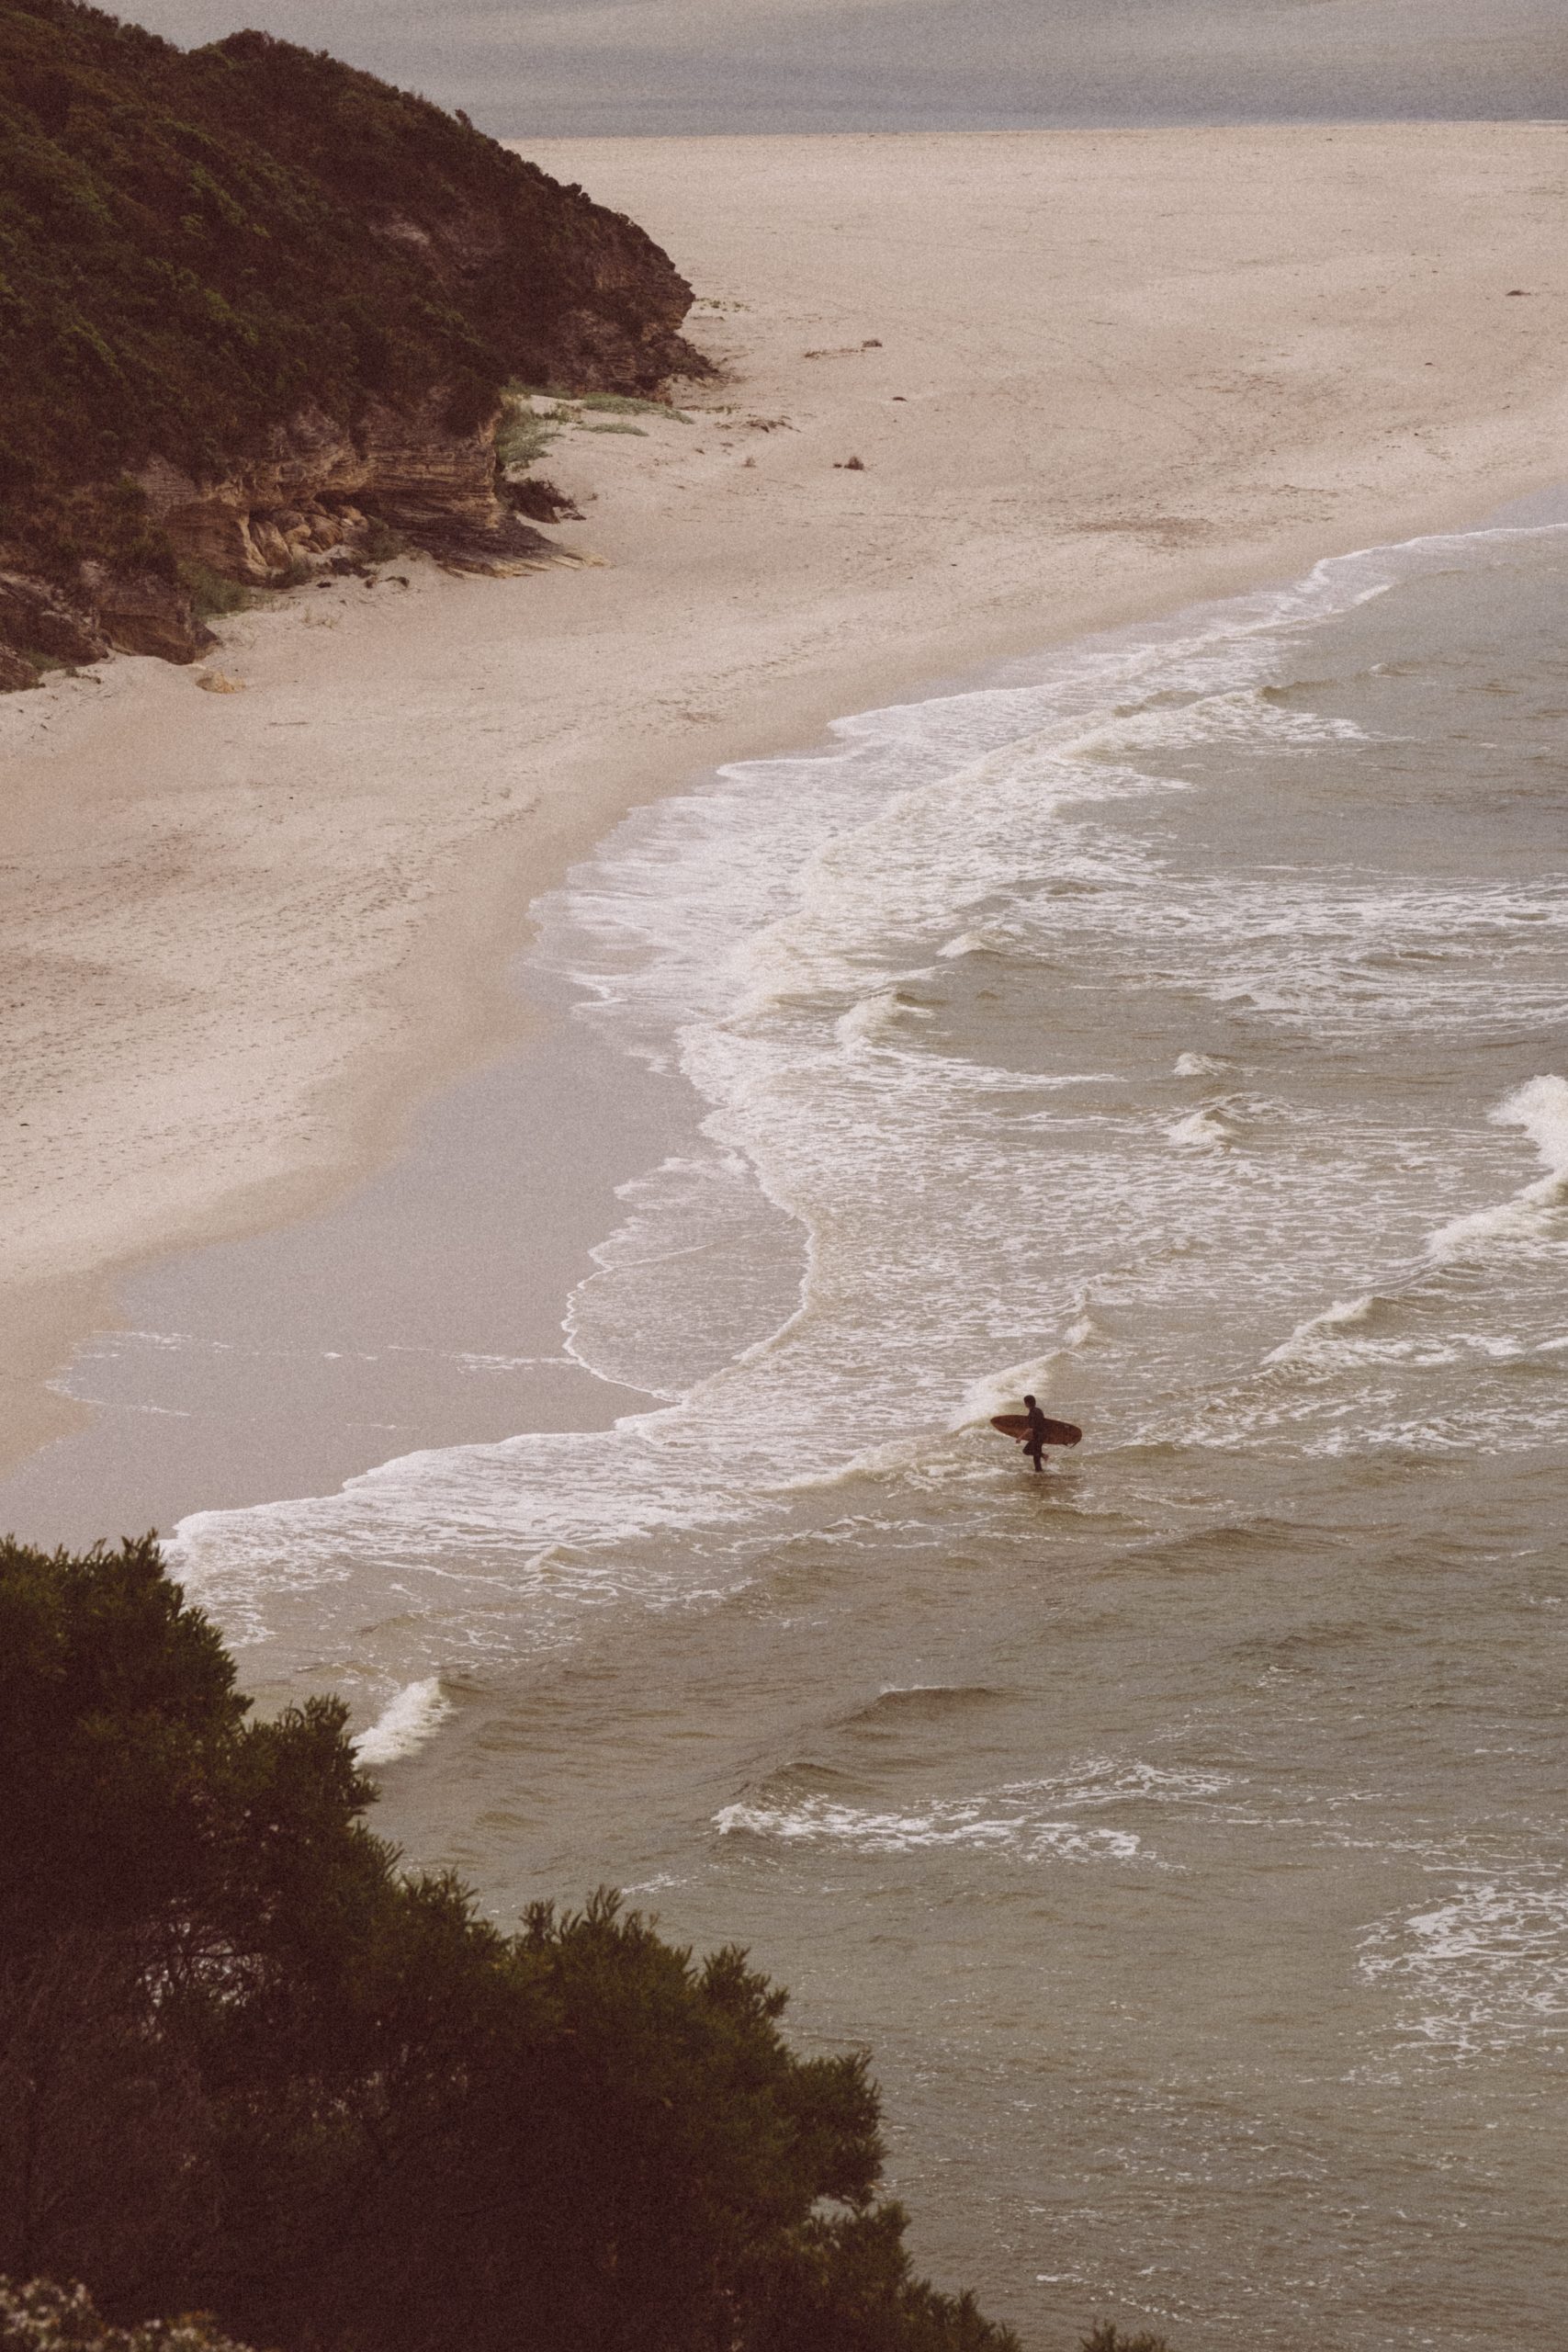 Surfer alone on a beach